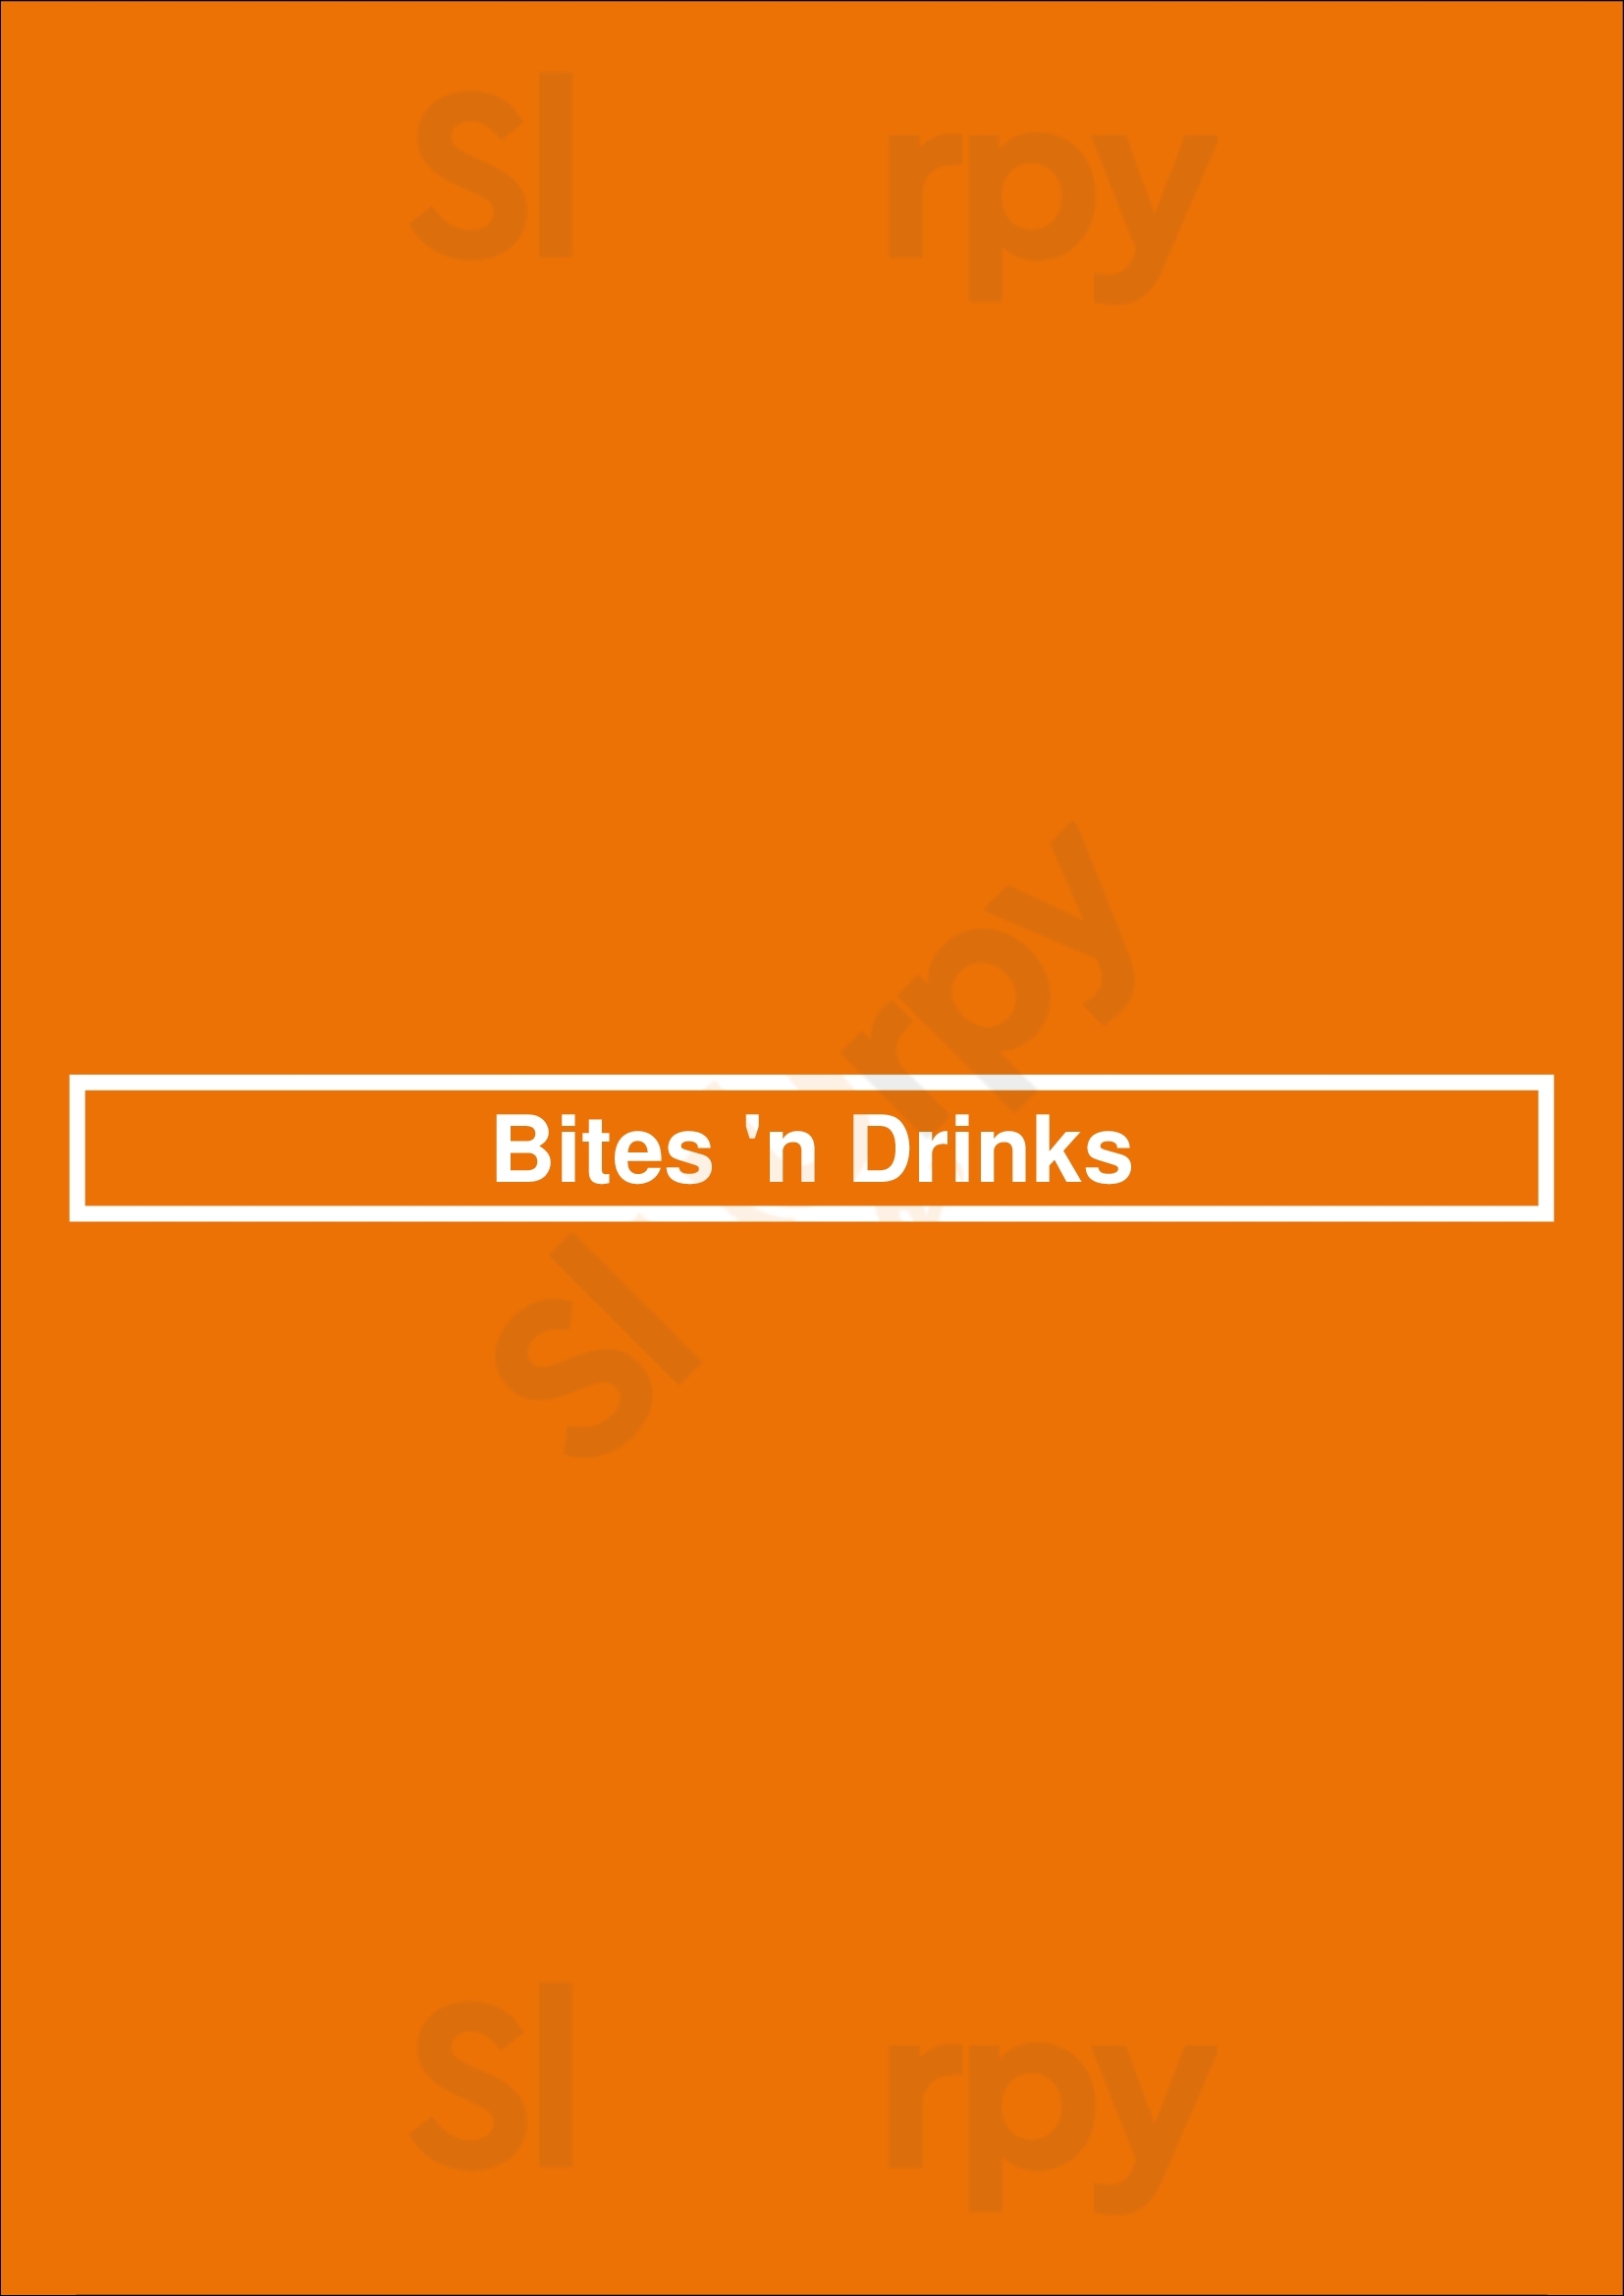 Bites 'n Drinks Delft Menu - 1